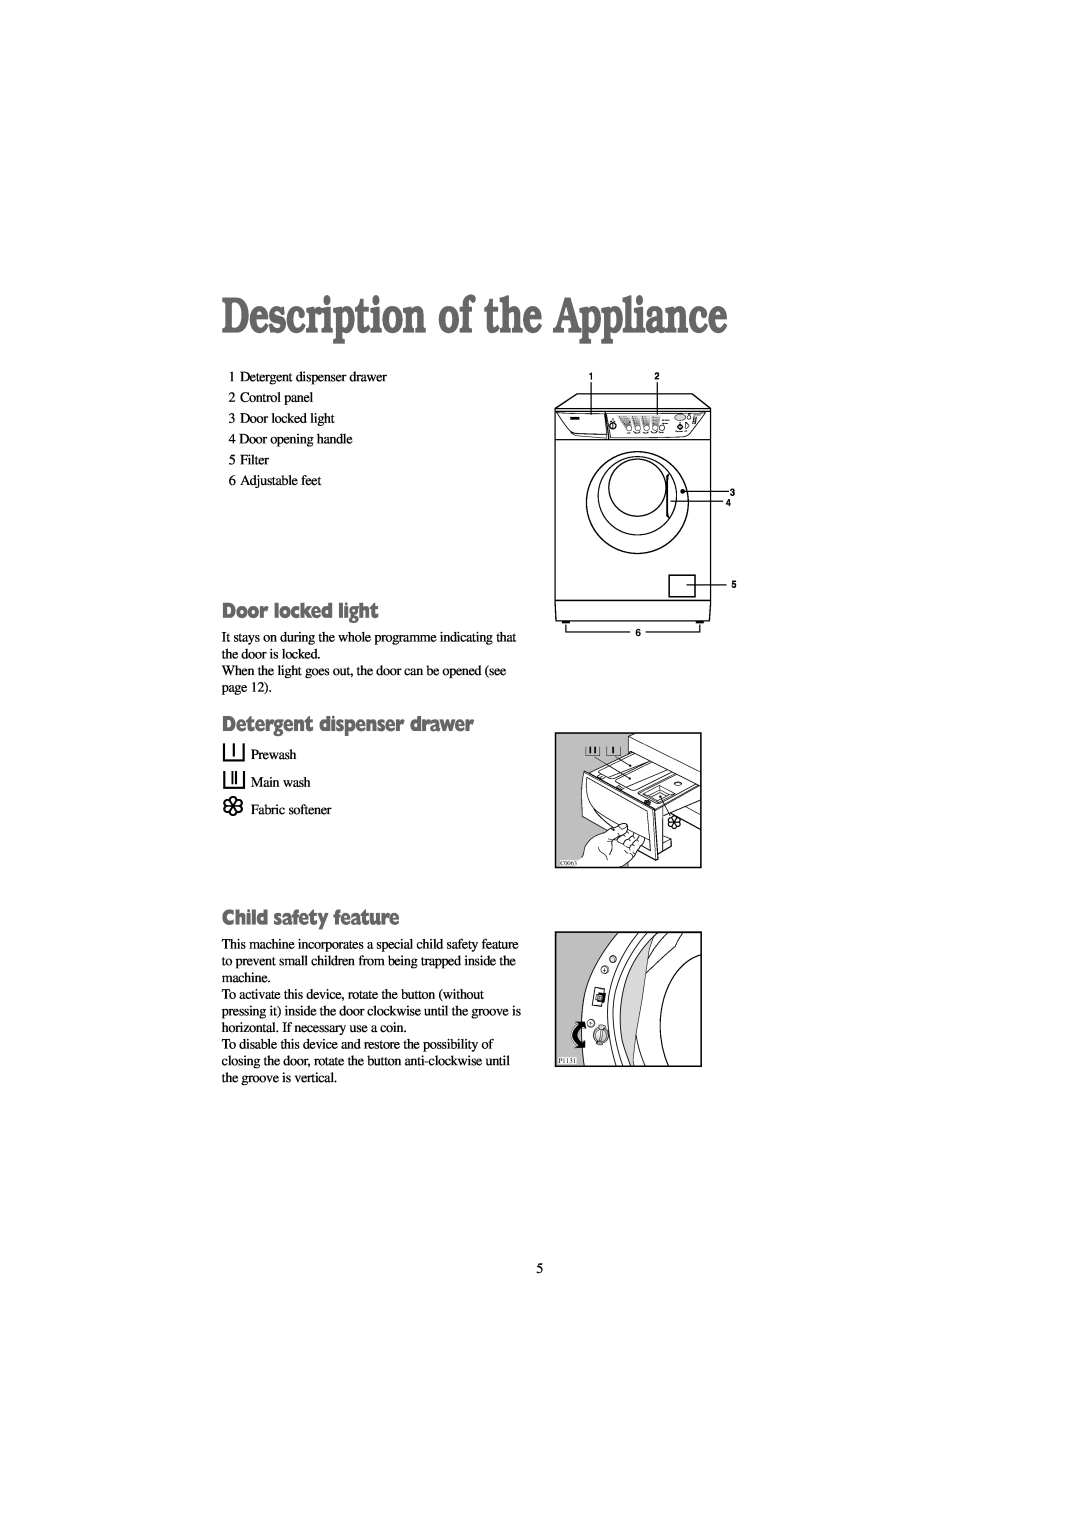 Electrolux FJD 1266 W Description of the Appliance, Door locked light, Detergent dispenser drawer, Child safety feature 